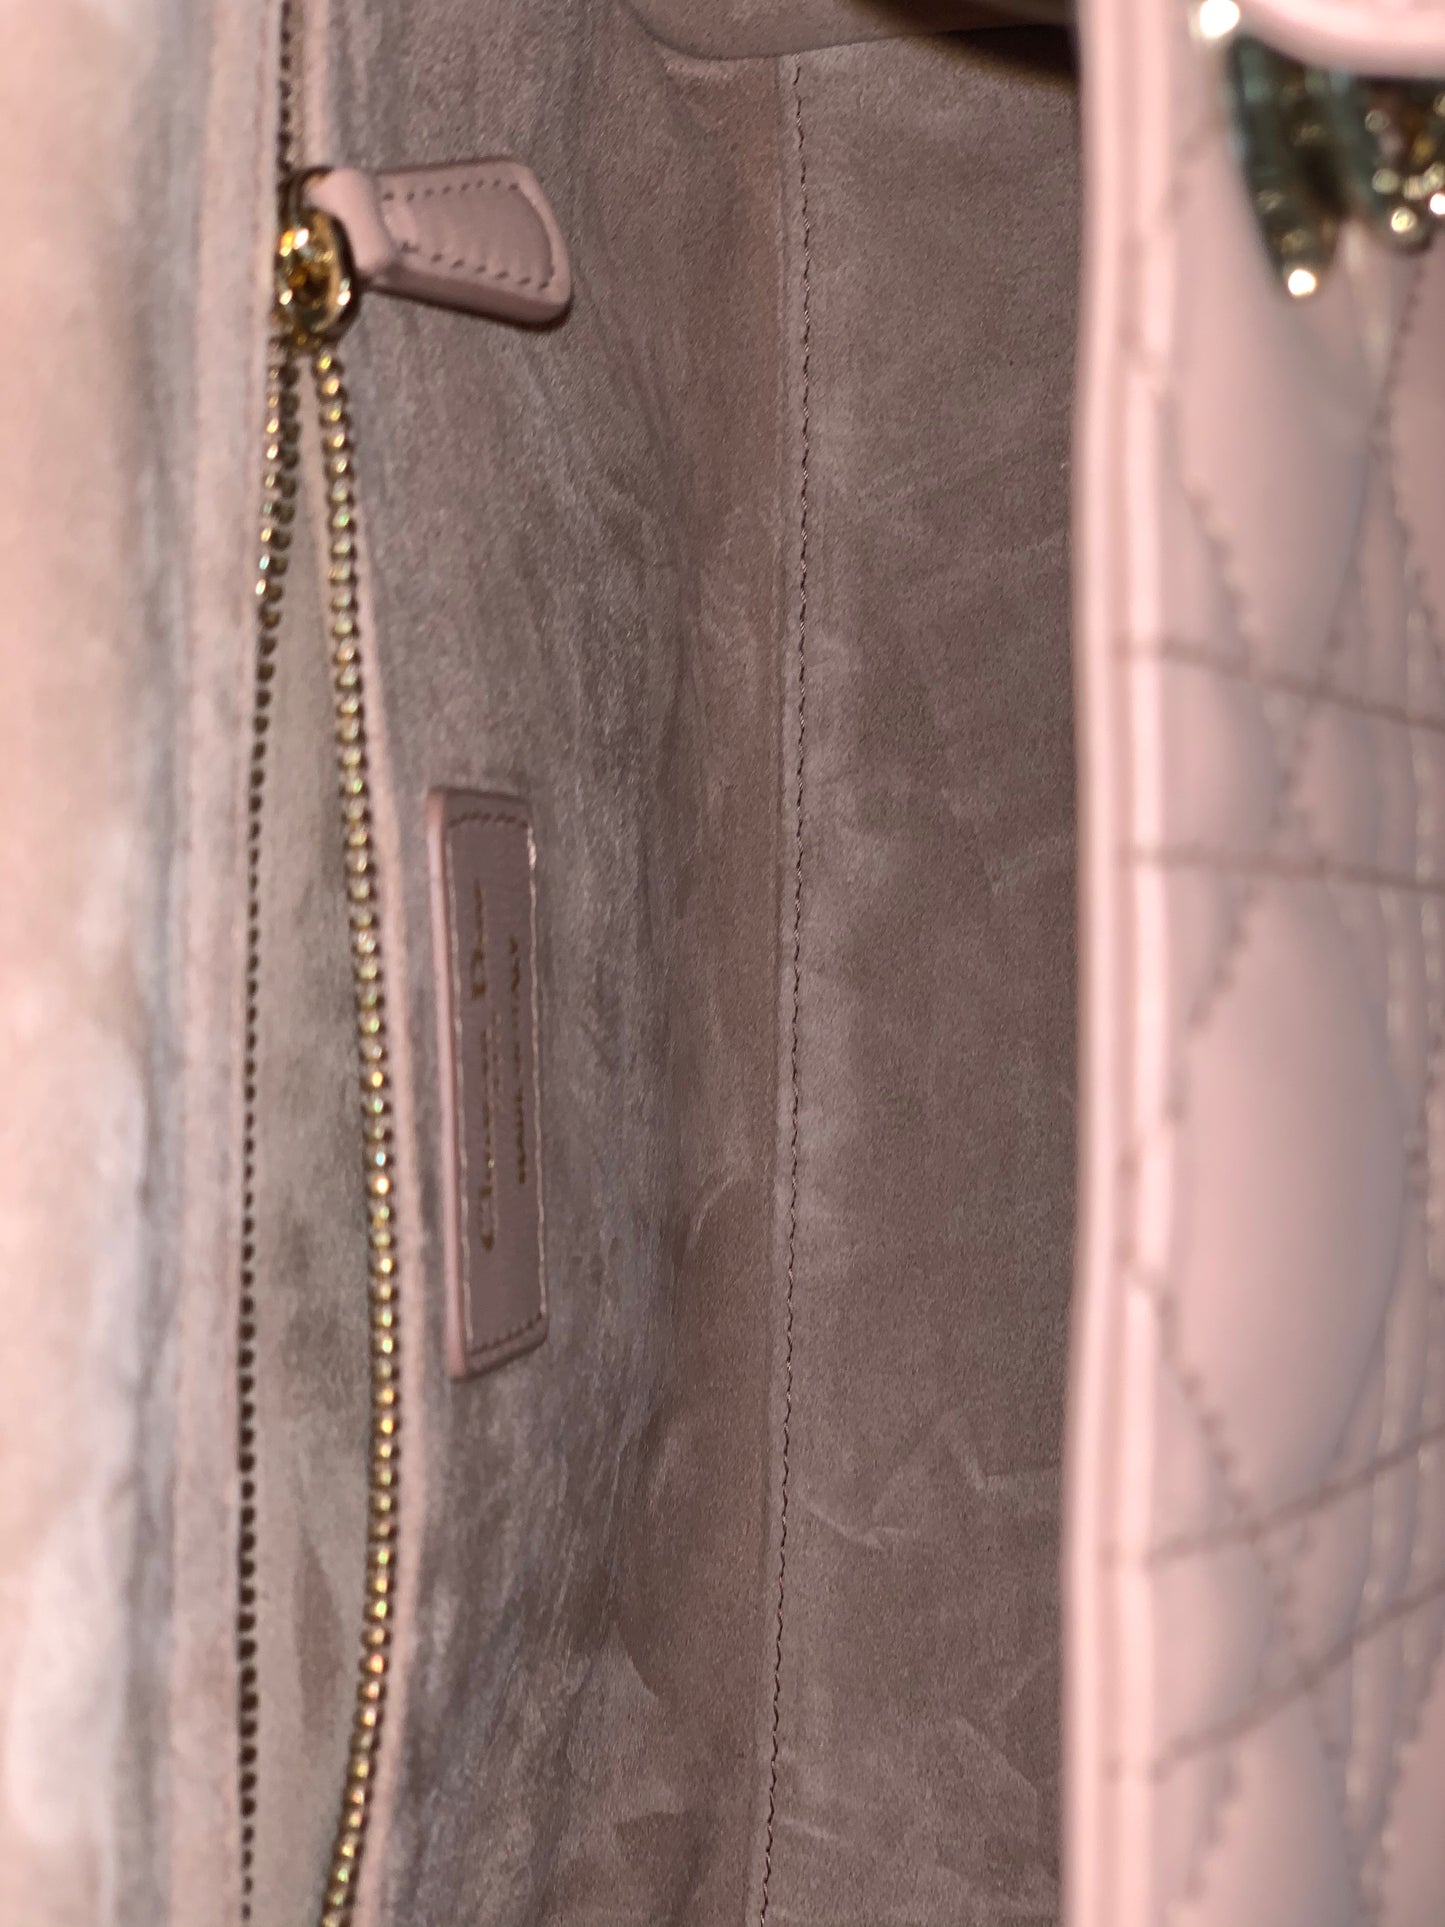 DIOR - Lady Dior pink medium bag silver hardware